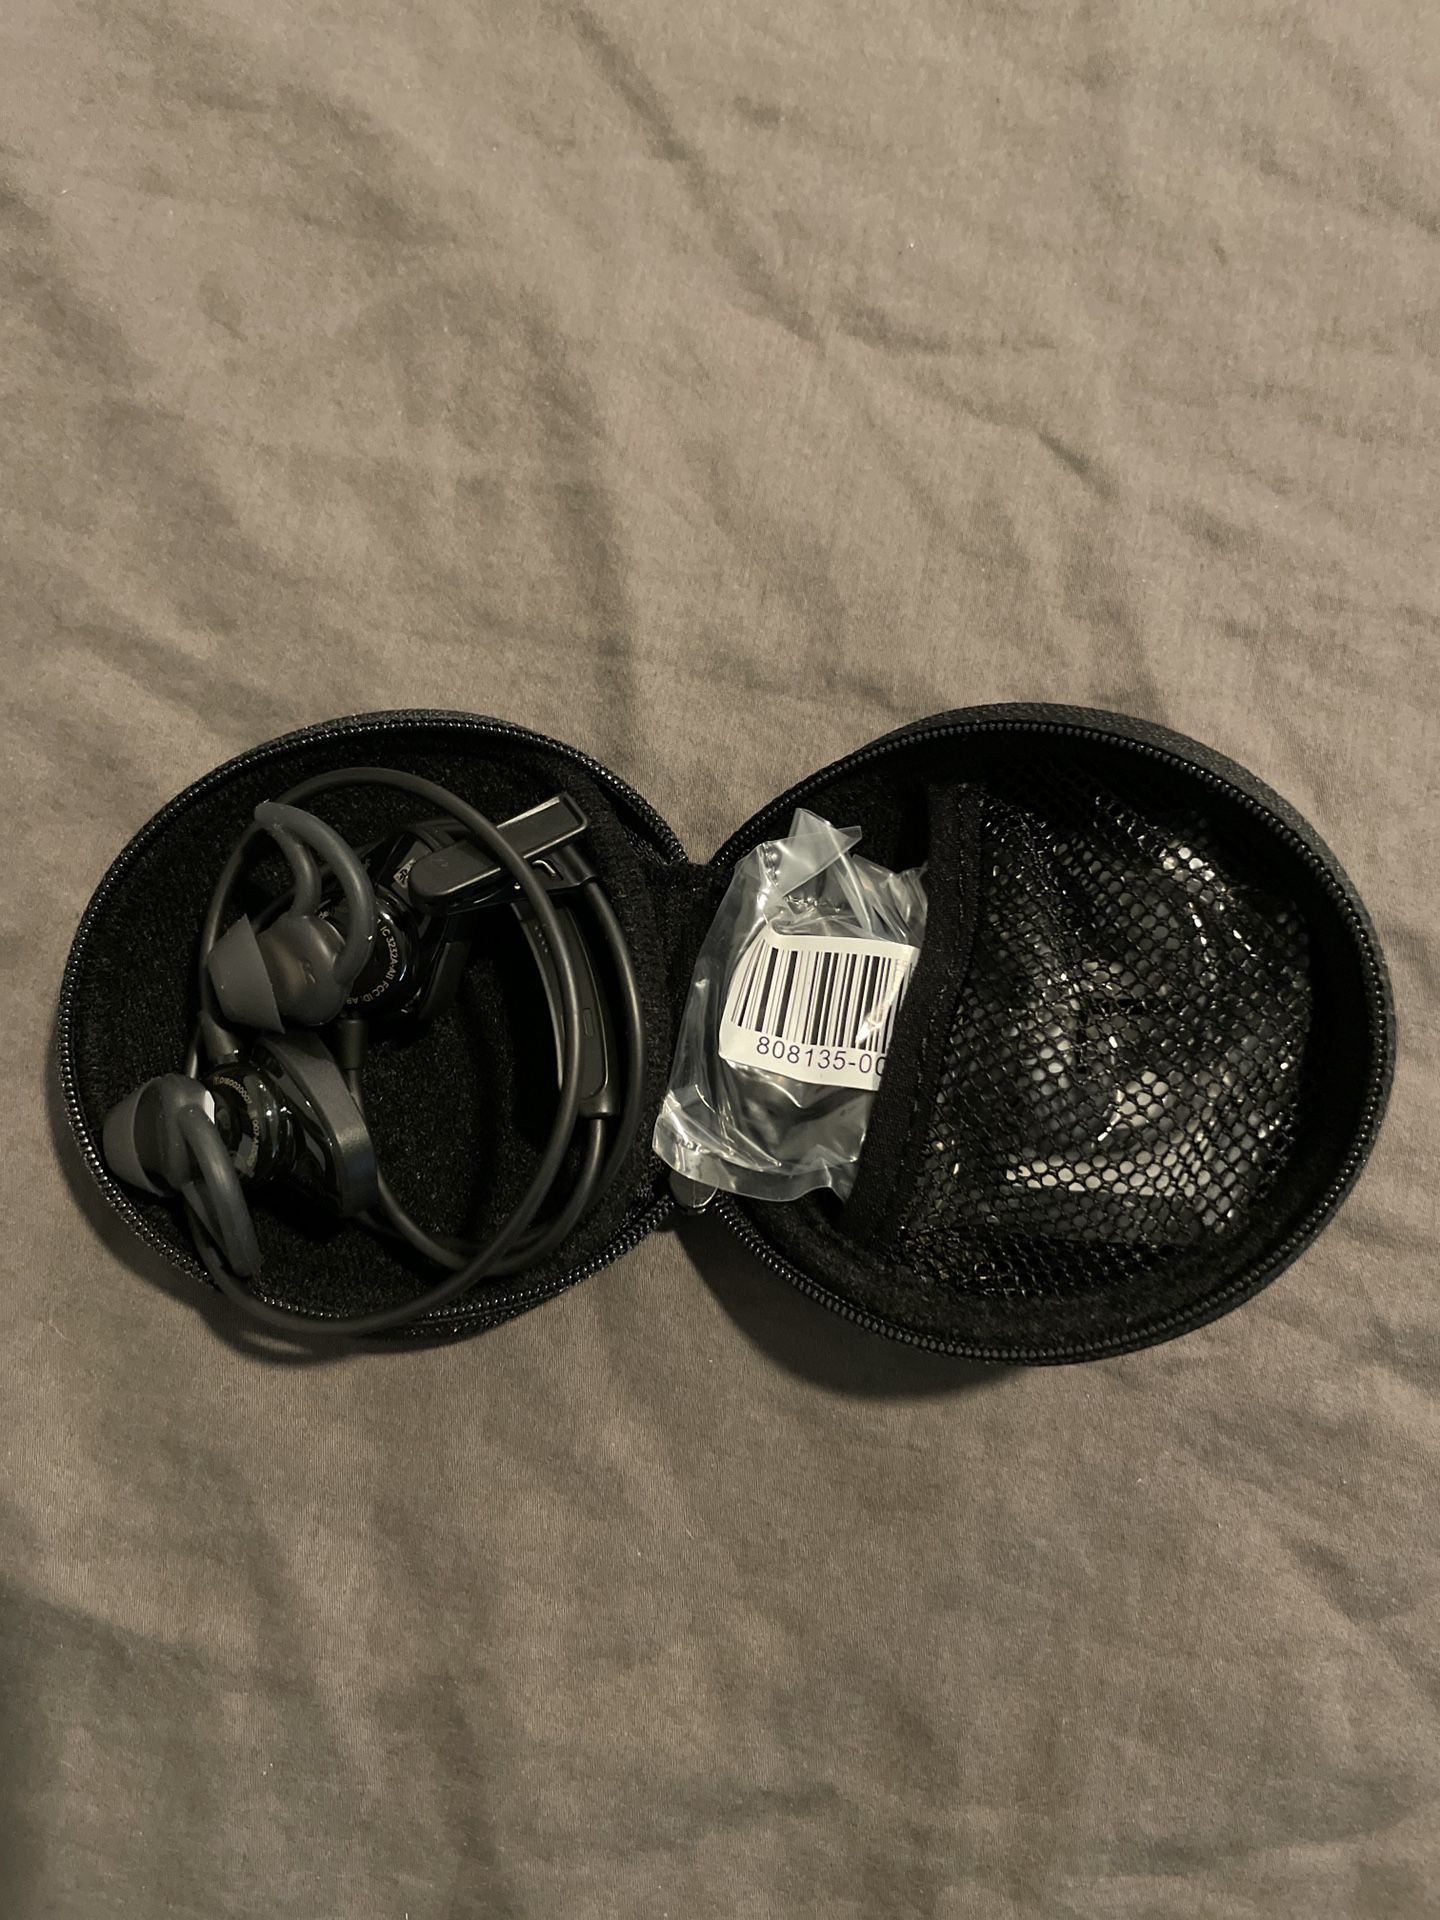 Bose SoundSport Wireless Sports Earbuds - Black